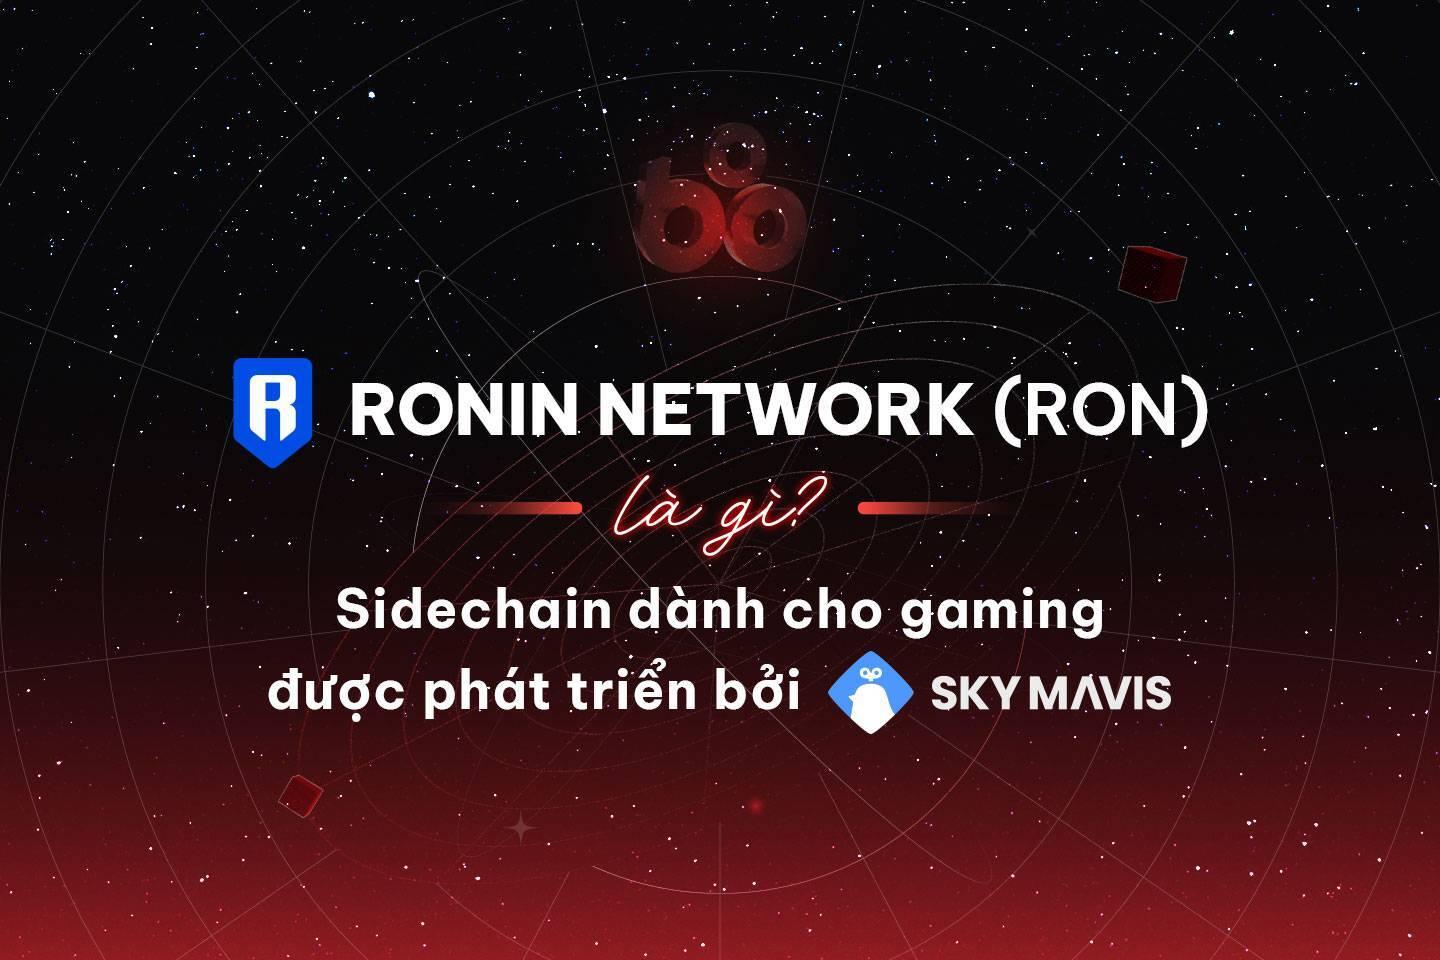 ronin-network-ron-la-gi-sidechain-danh-cho-game-web3-duoc-phat-trien-boi-sky-mavis